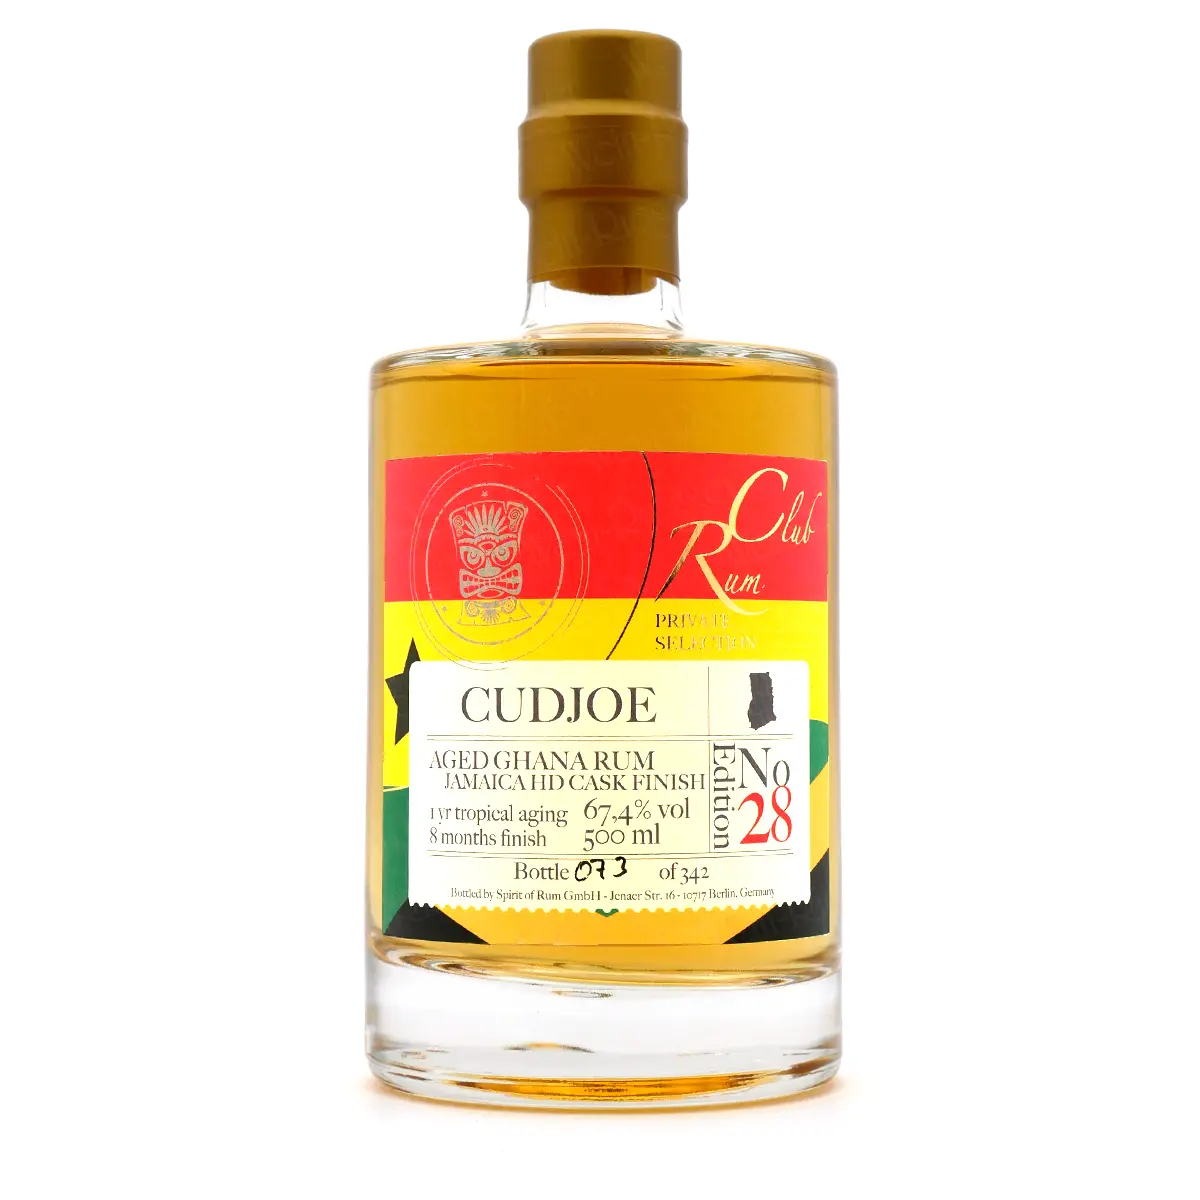 CUDJOE Ghana Rum Ed. 28 | Rumclub Private Selection